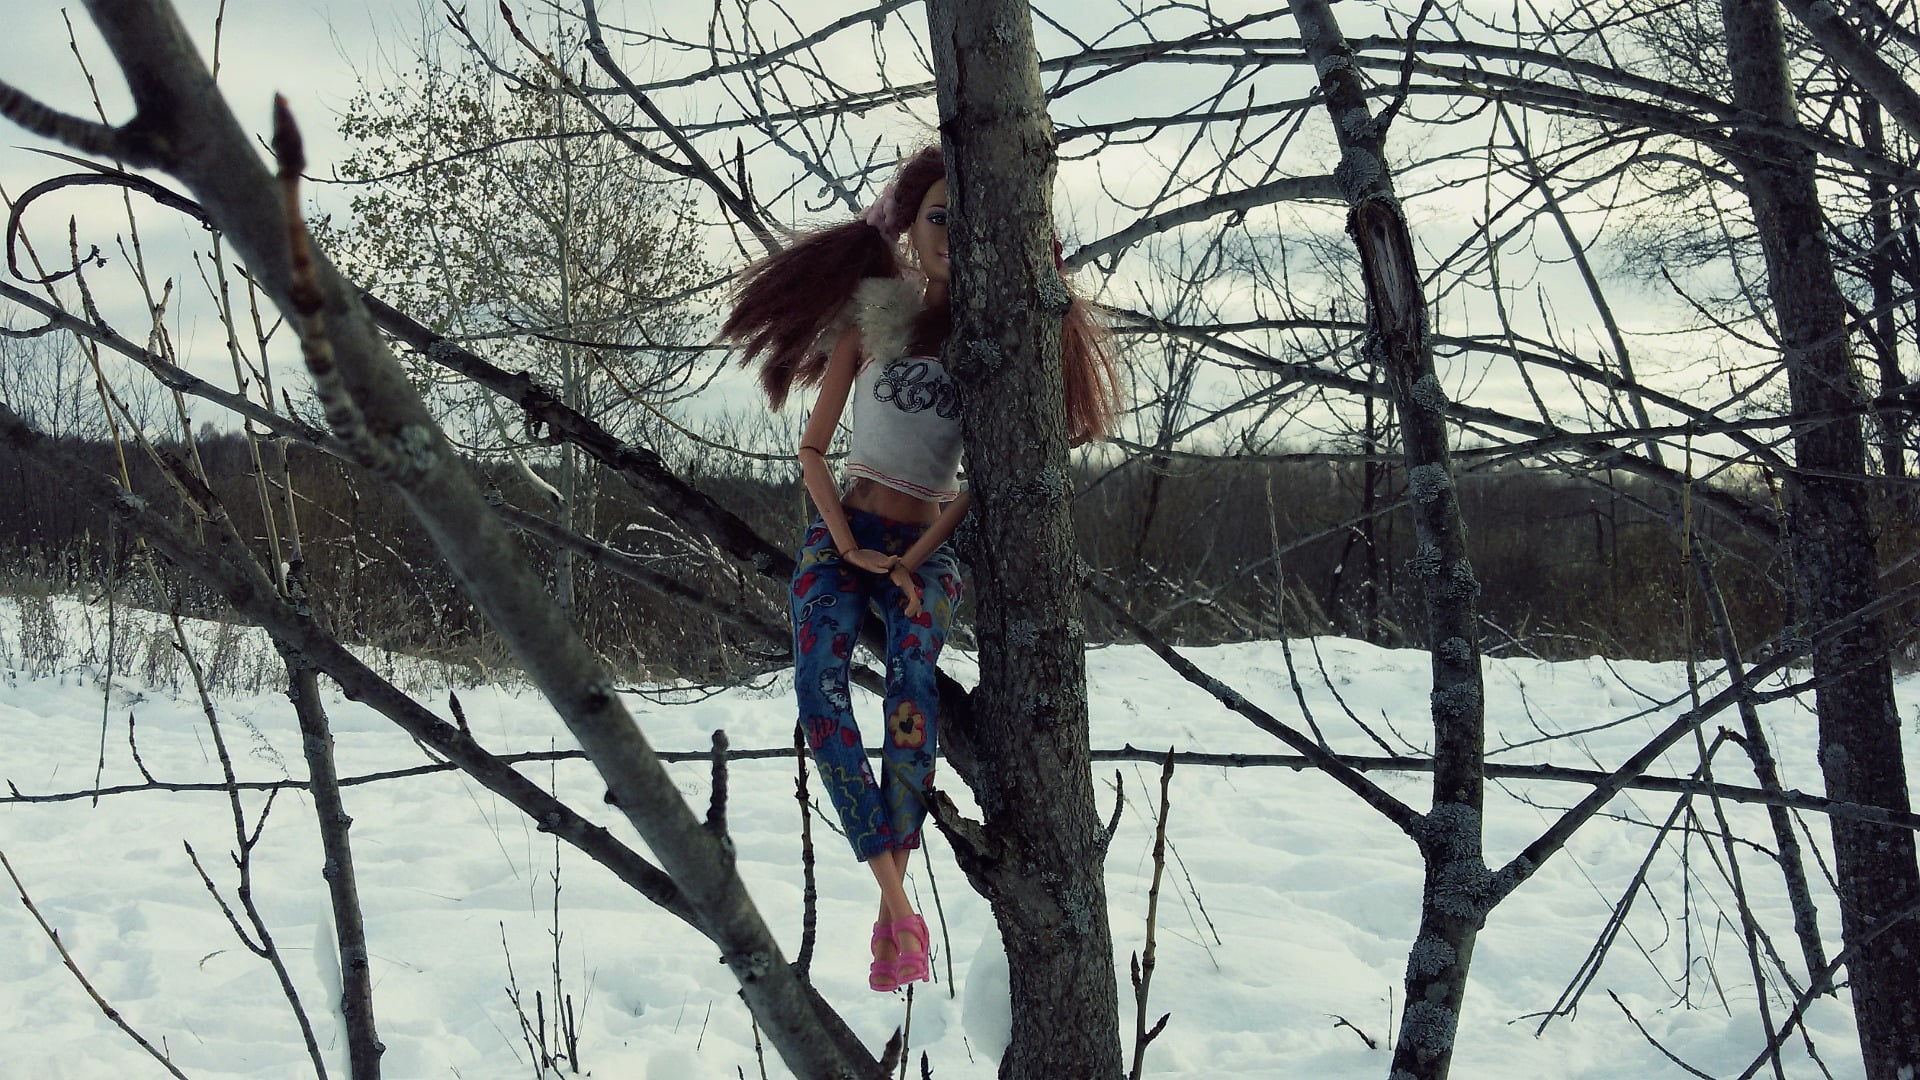 barbie doll, Russia, winter, snow, trees, cold temperature, bare tree